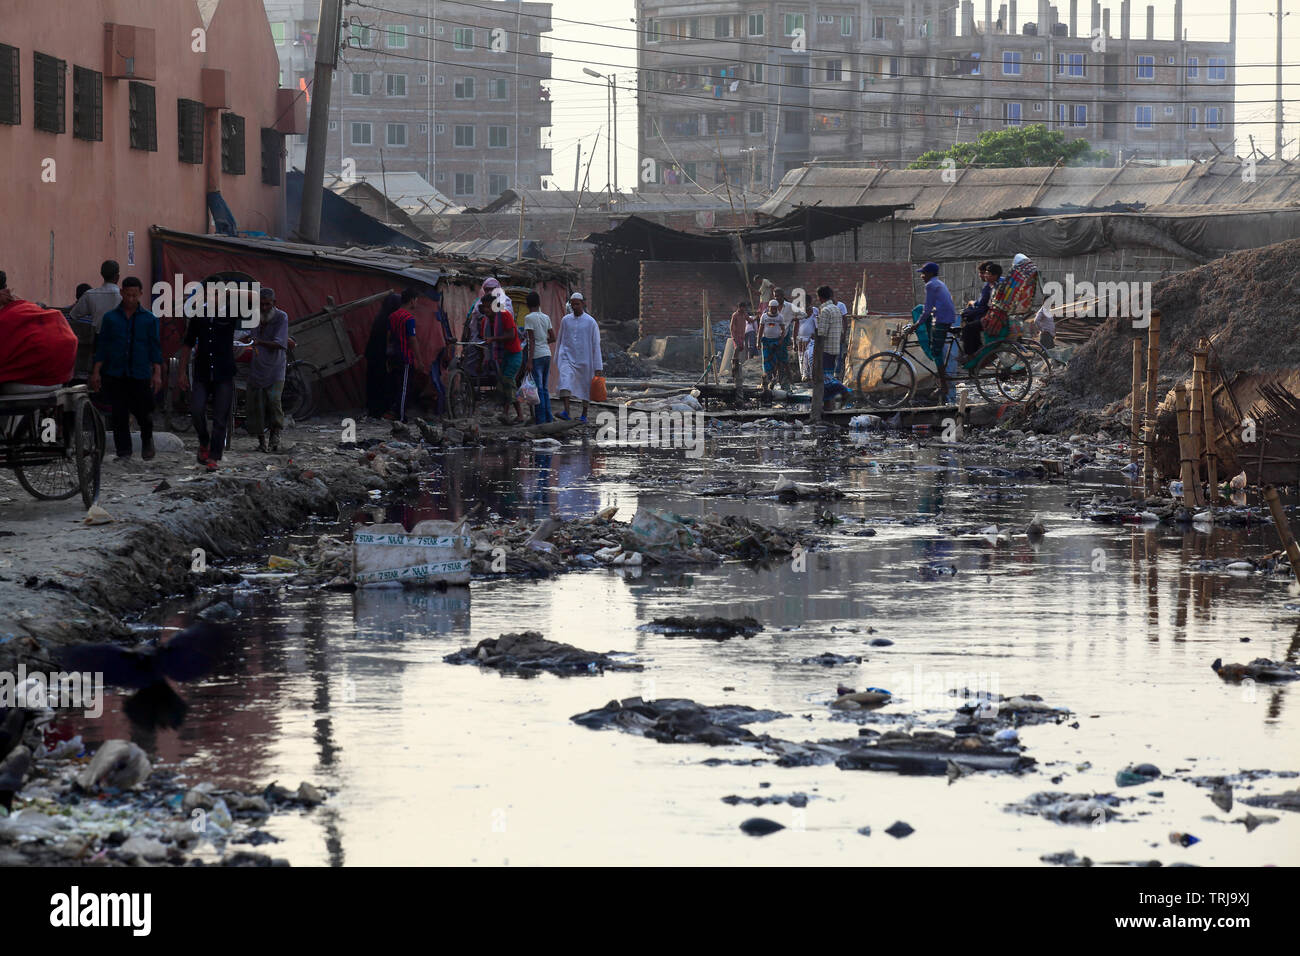 The highly polluted Hazaribagh tannery area in Dhaka, Bangladesh.  Dhaka, Bangladesh Stock Photo